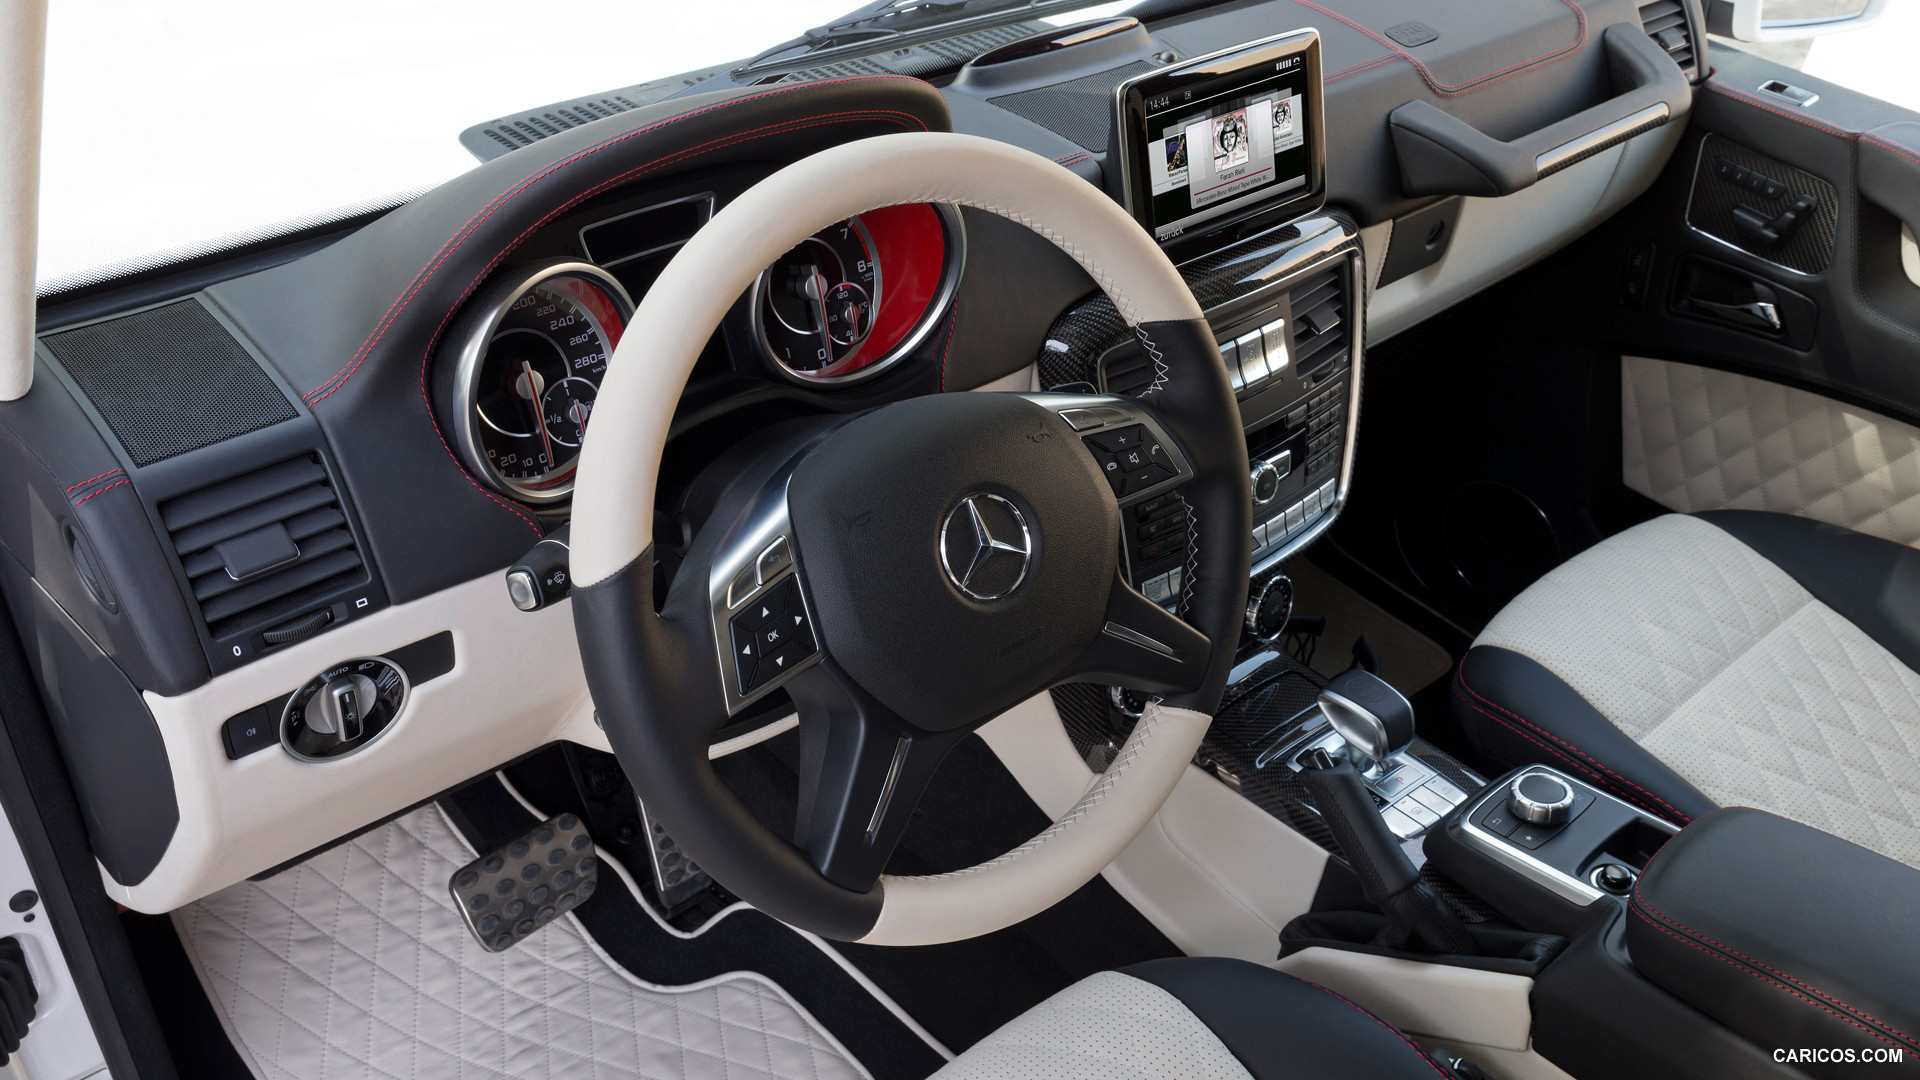 2013 Mercedes Benz G63 Amg 6x6 Concept Interior Hd